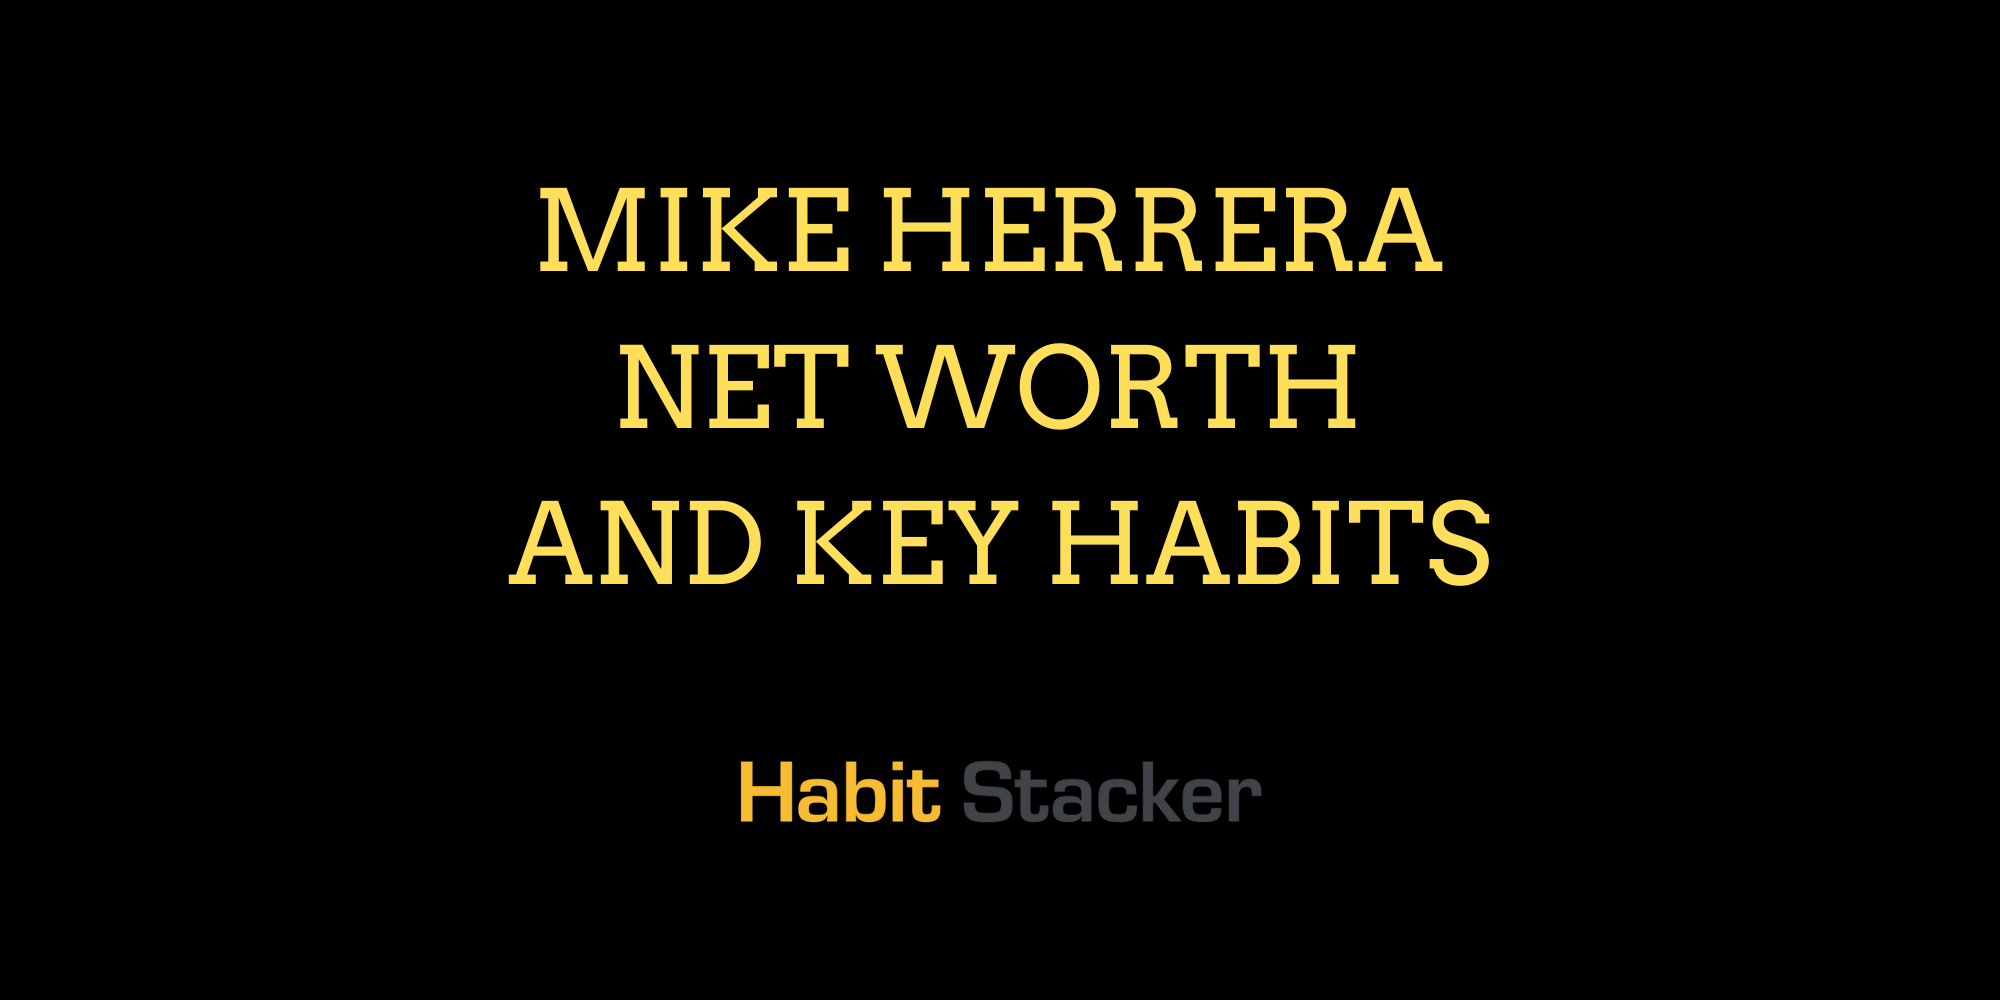 Mike Herrera Net Worth and Key Habits